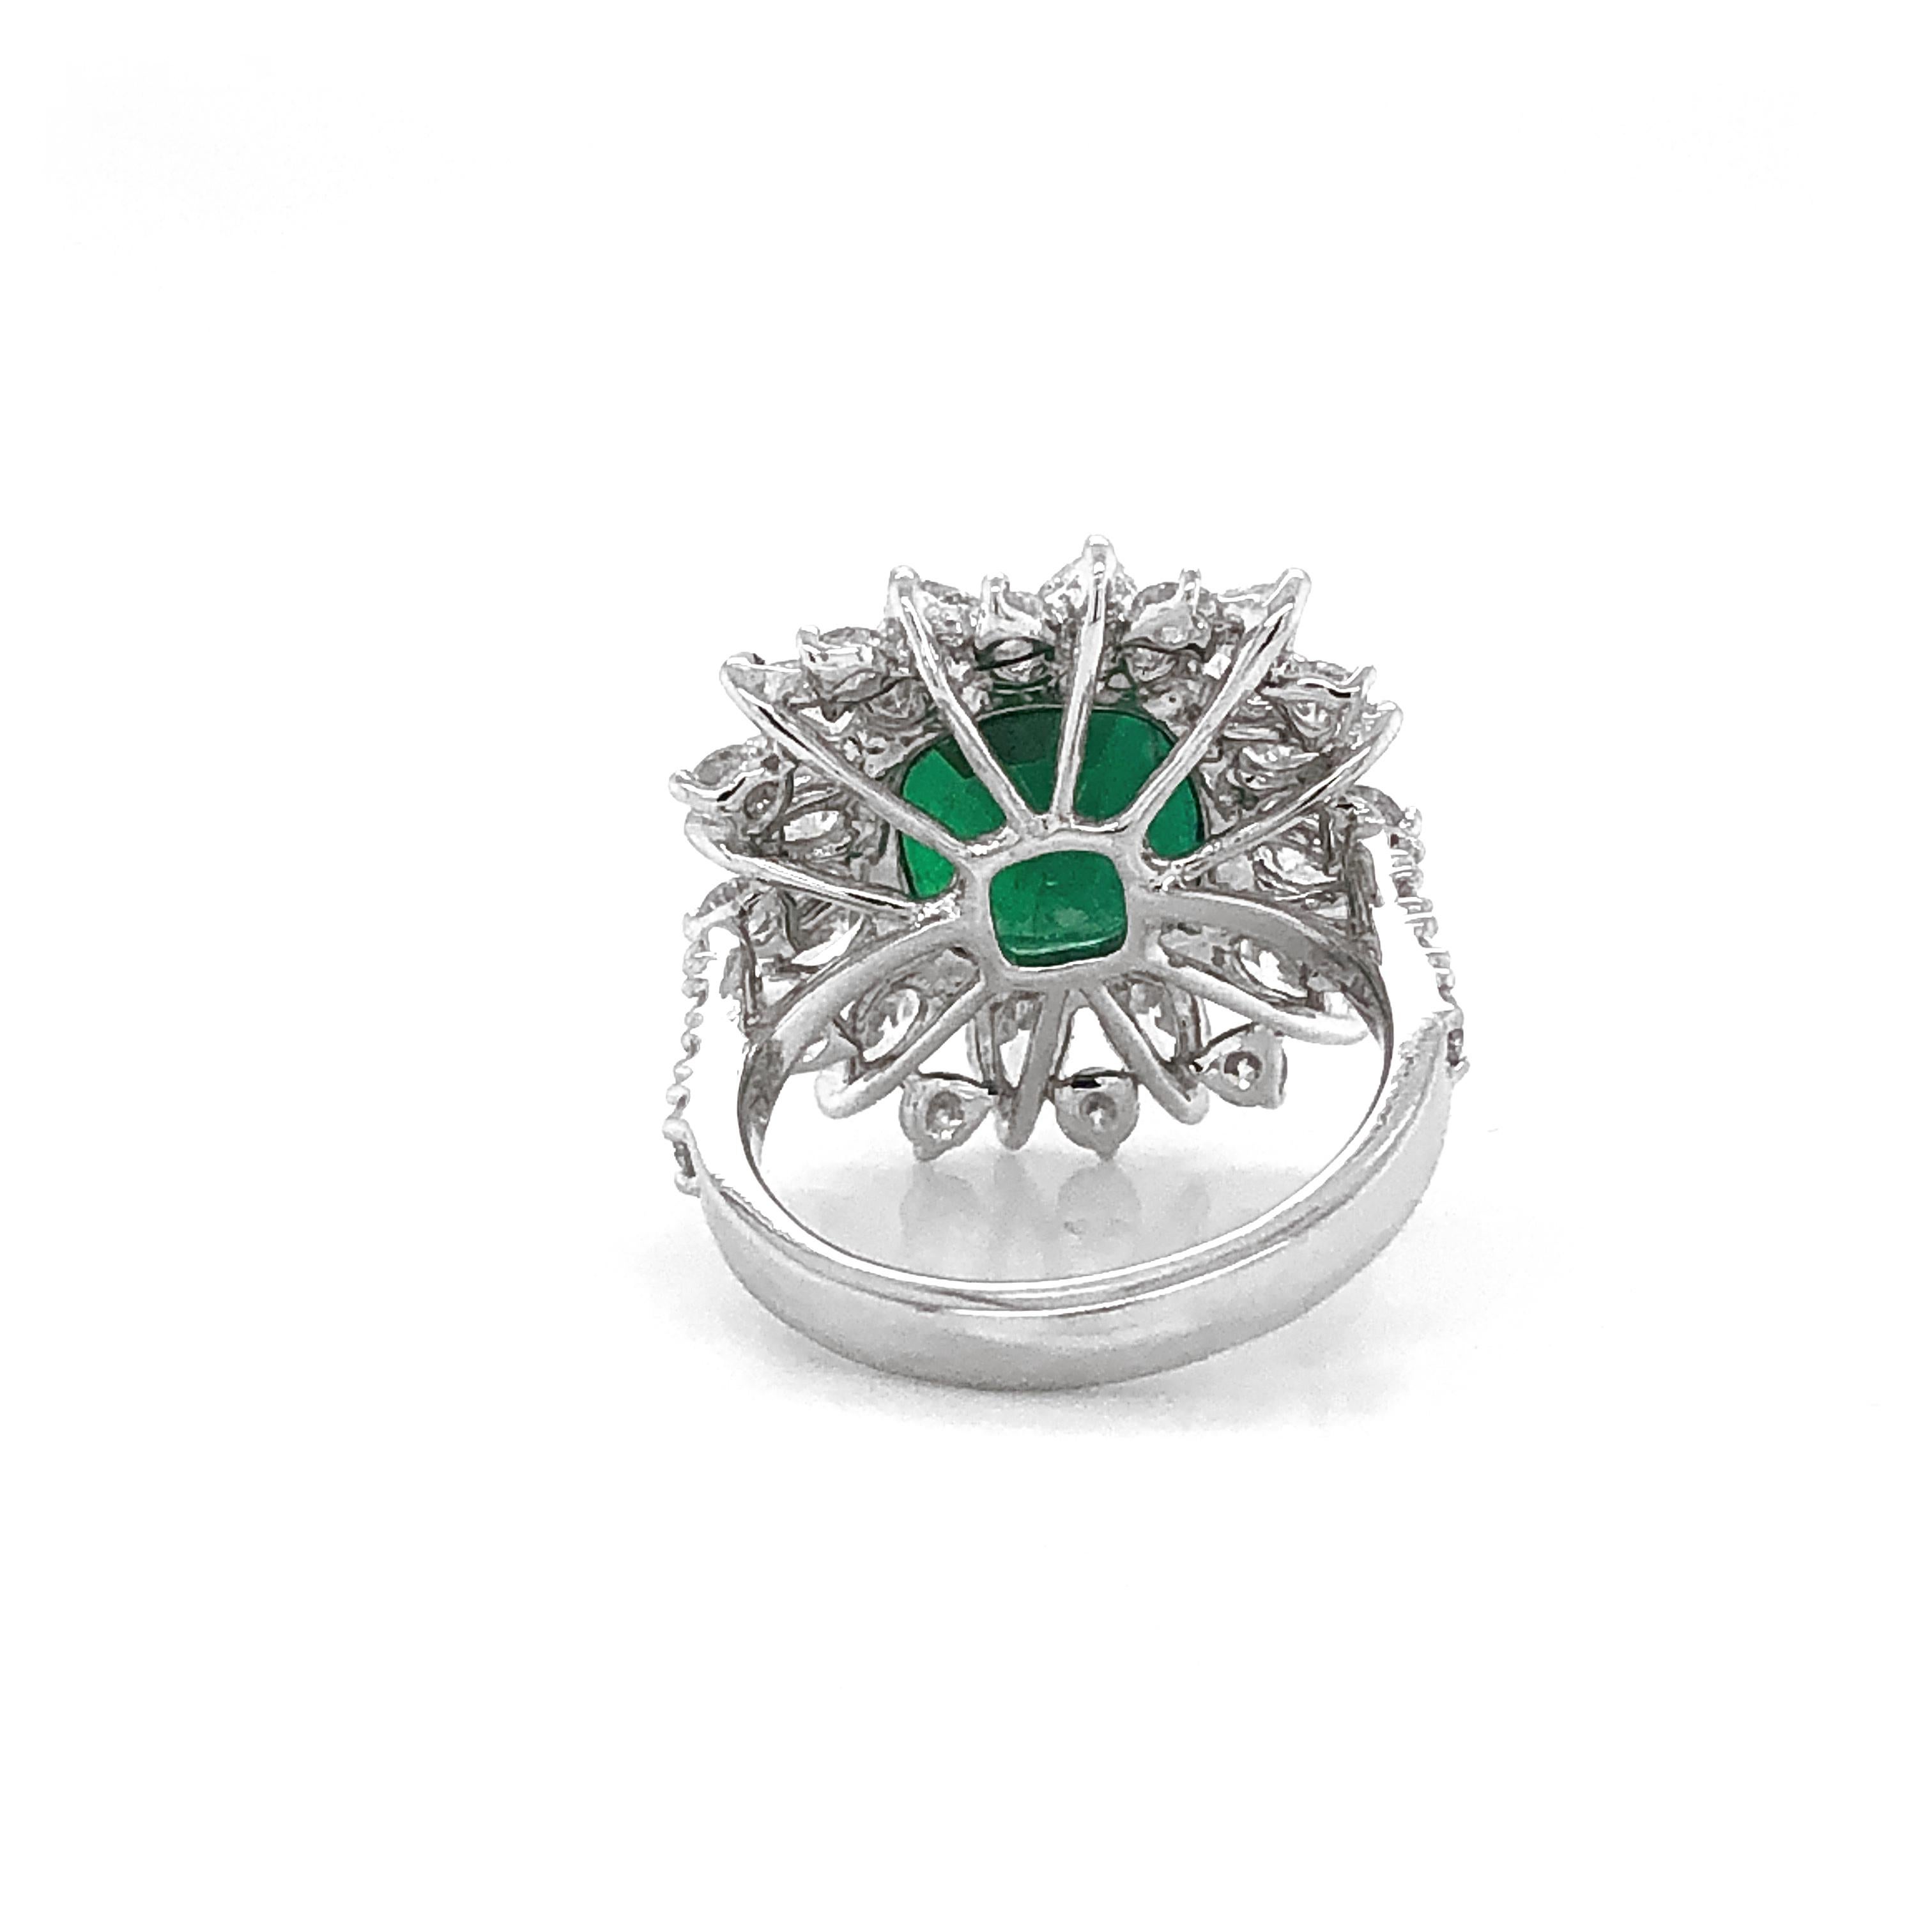 Certified Zambian Cushion Cut Emerald 3.13 Carat Diamond Platinum Cocktail Ring For Sale 1